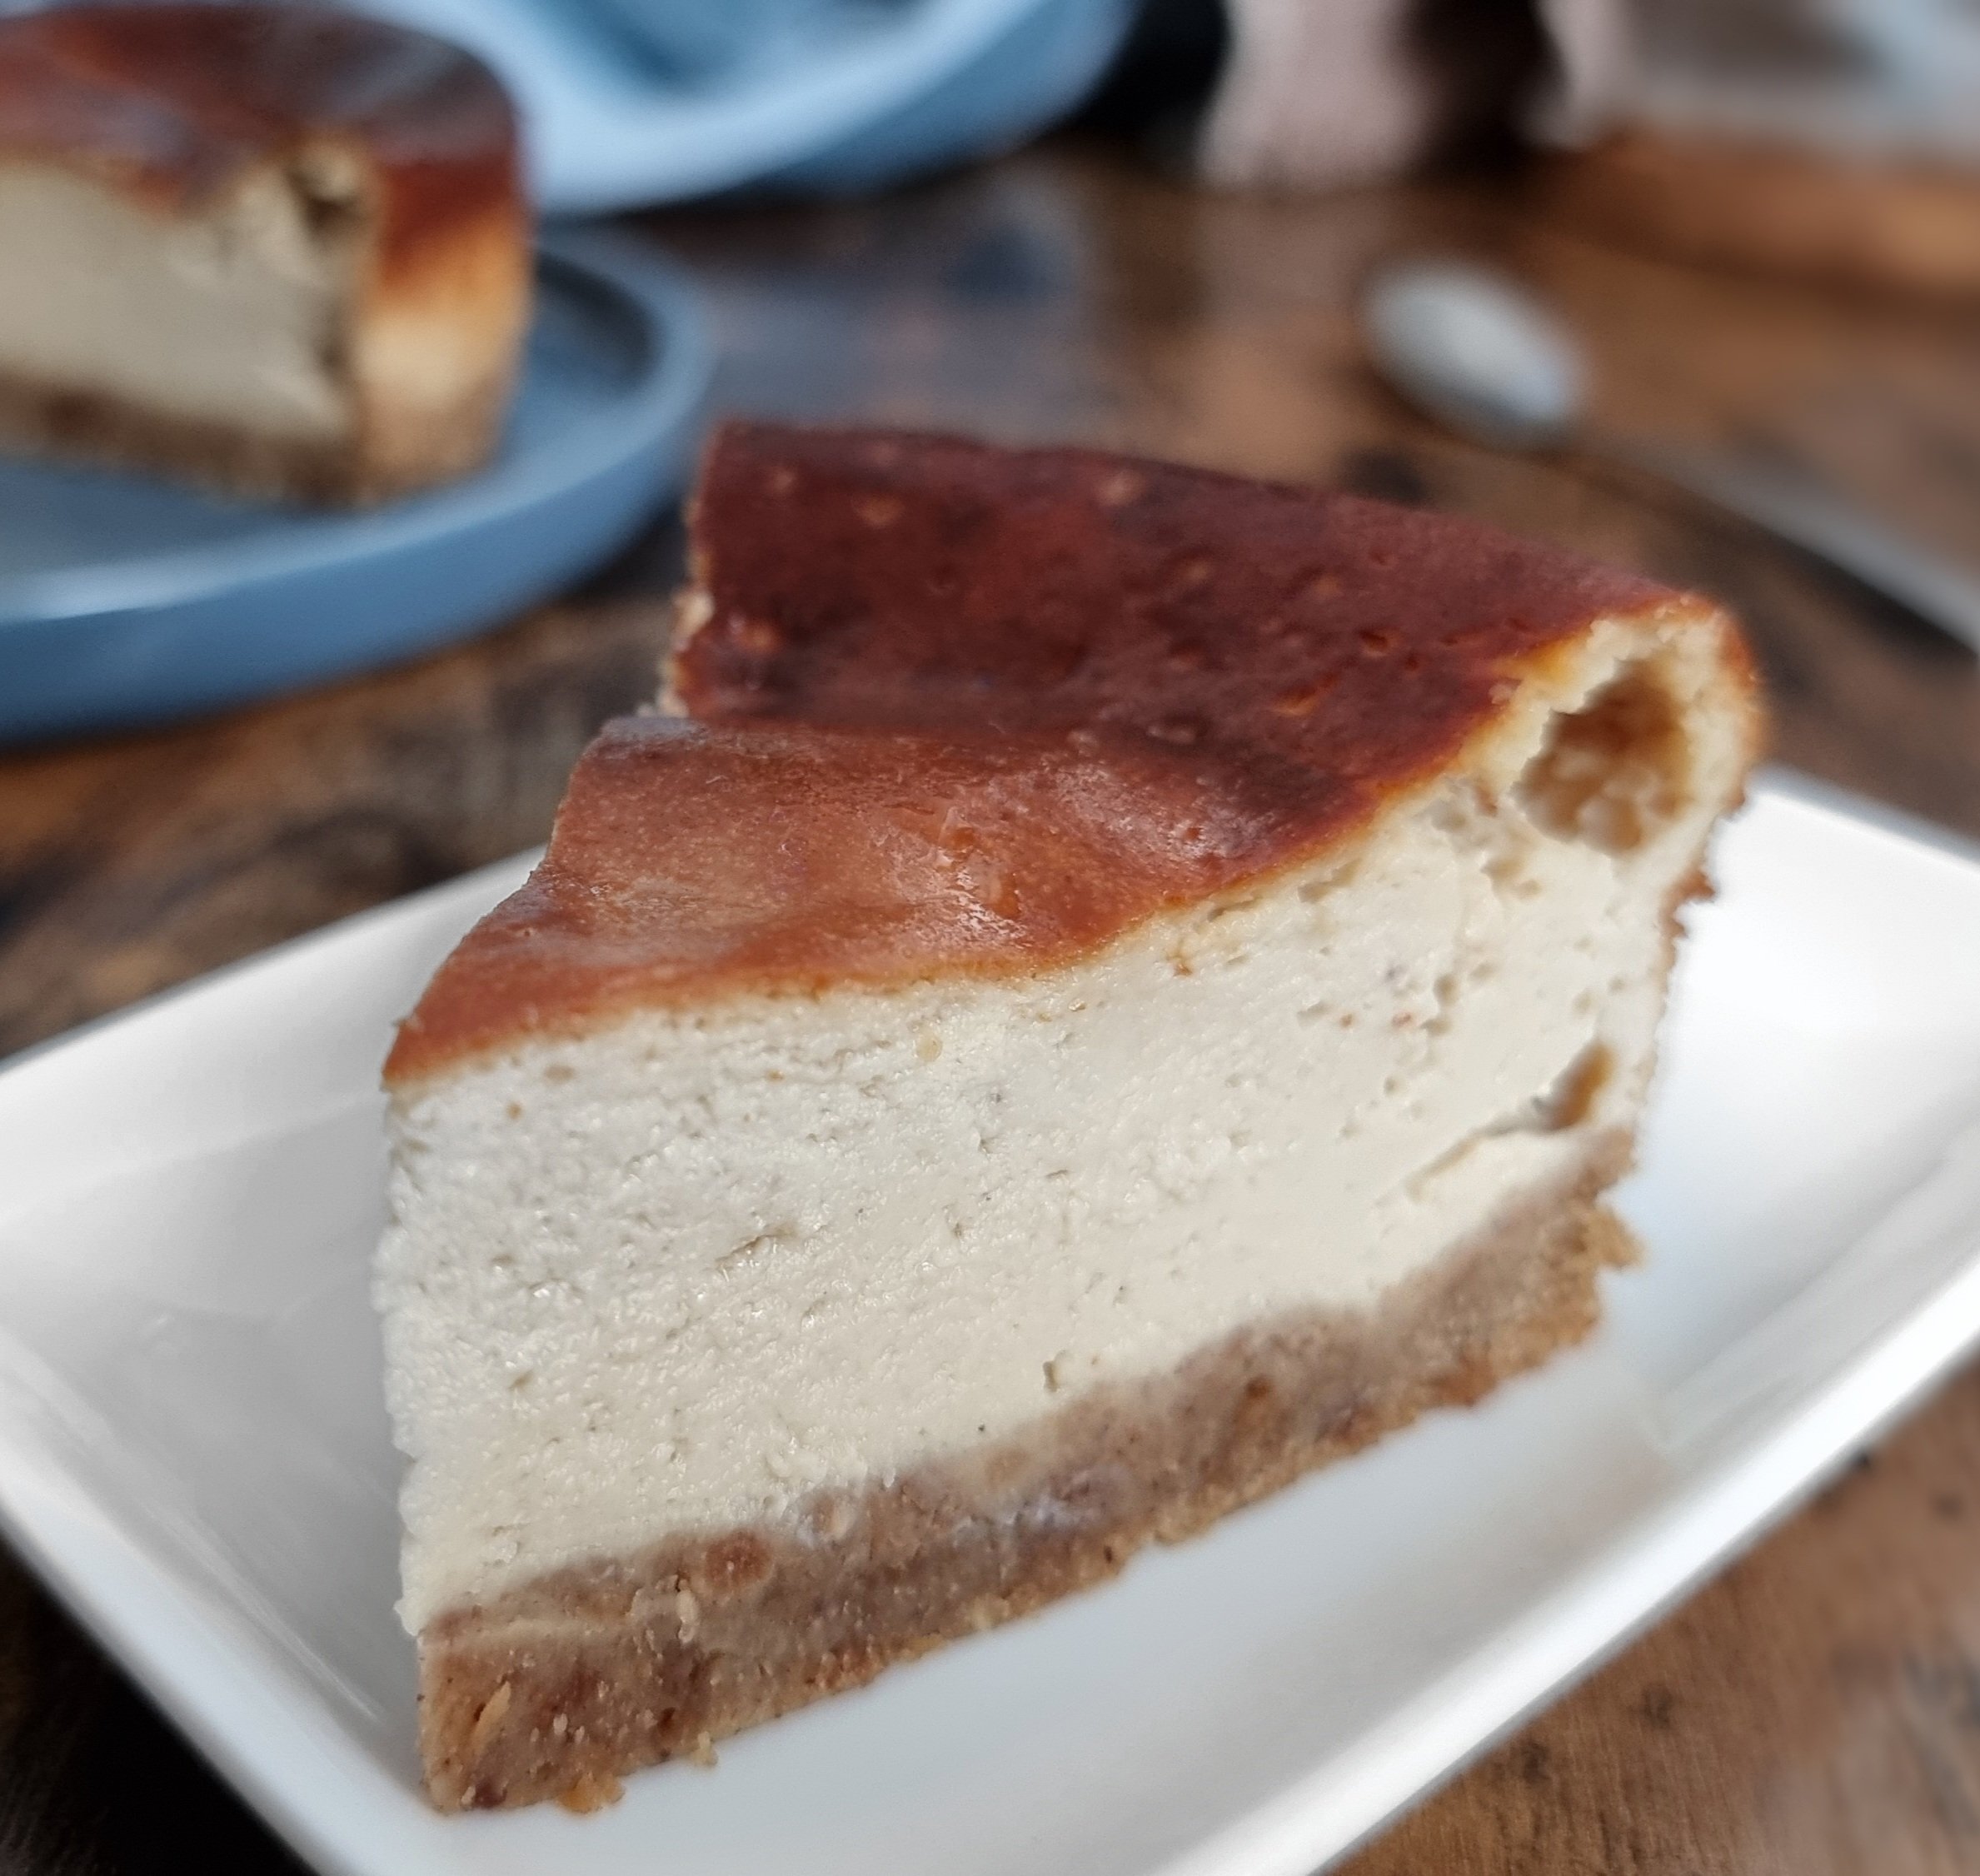 Cheesecake Sans Oeuf et Sans Lactose (Vegan)